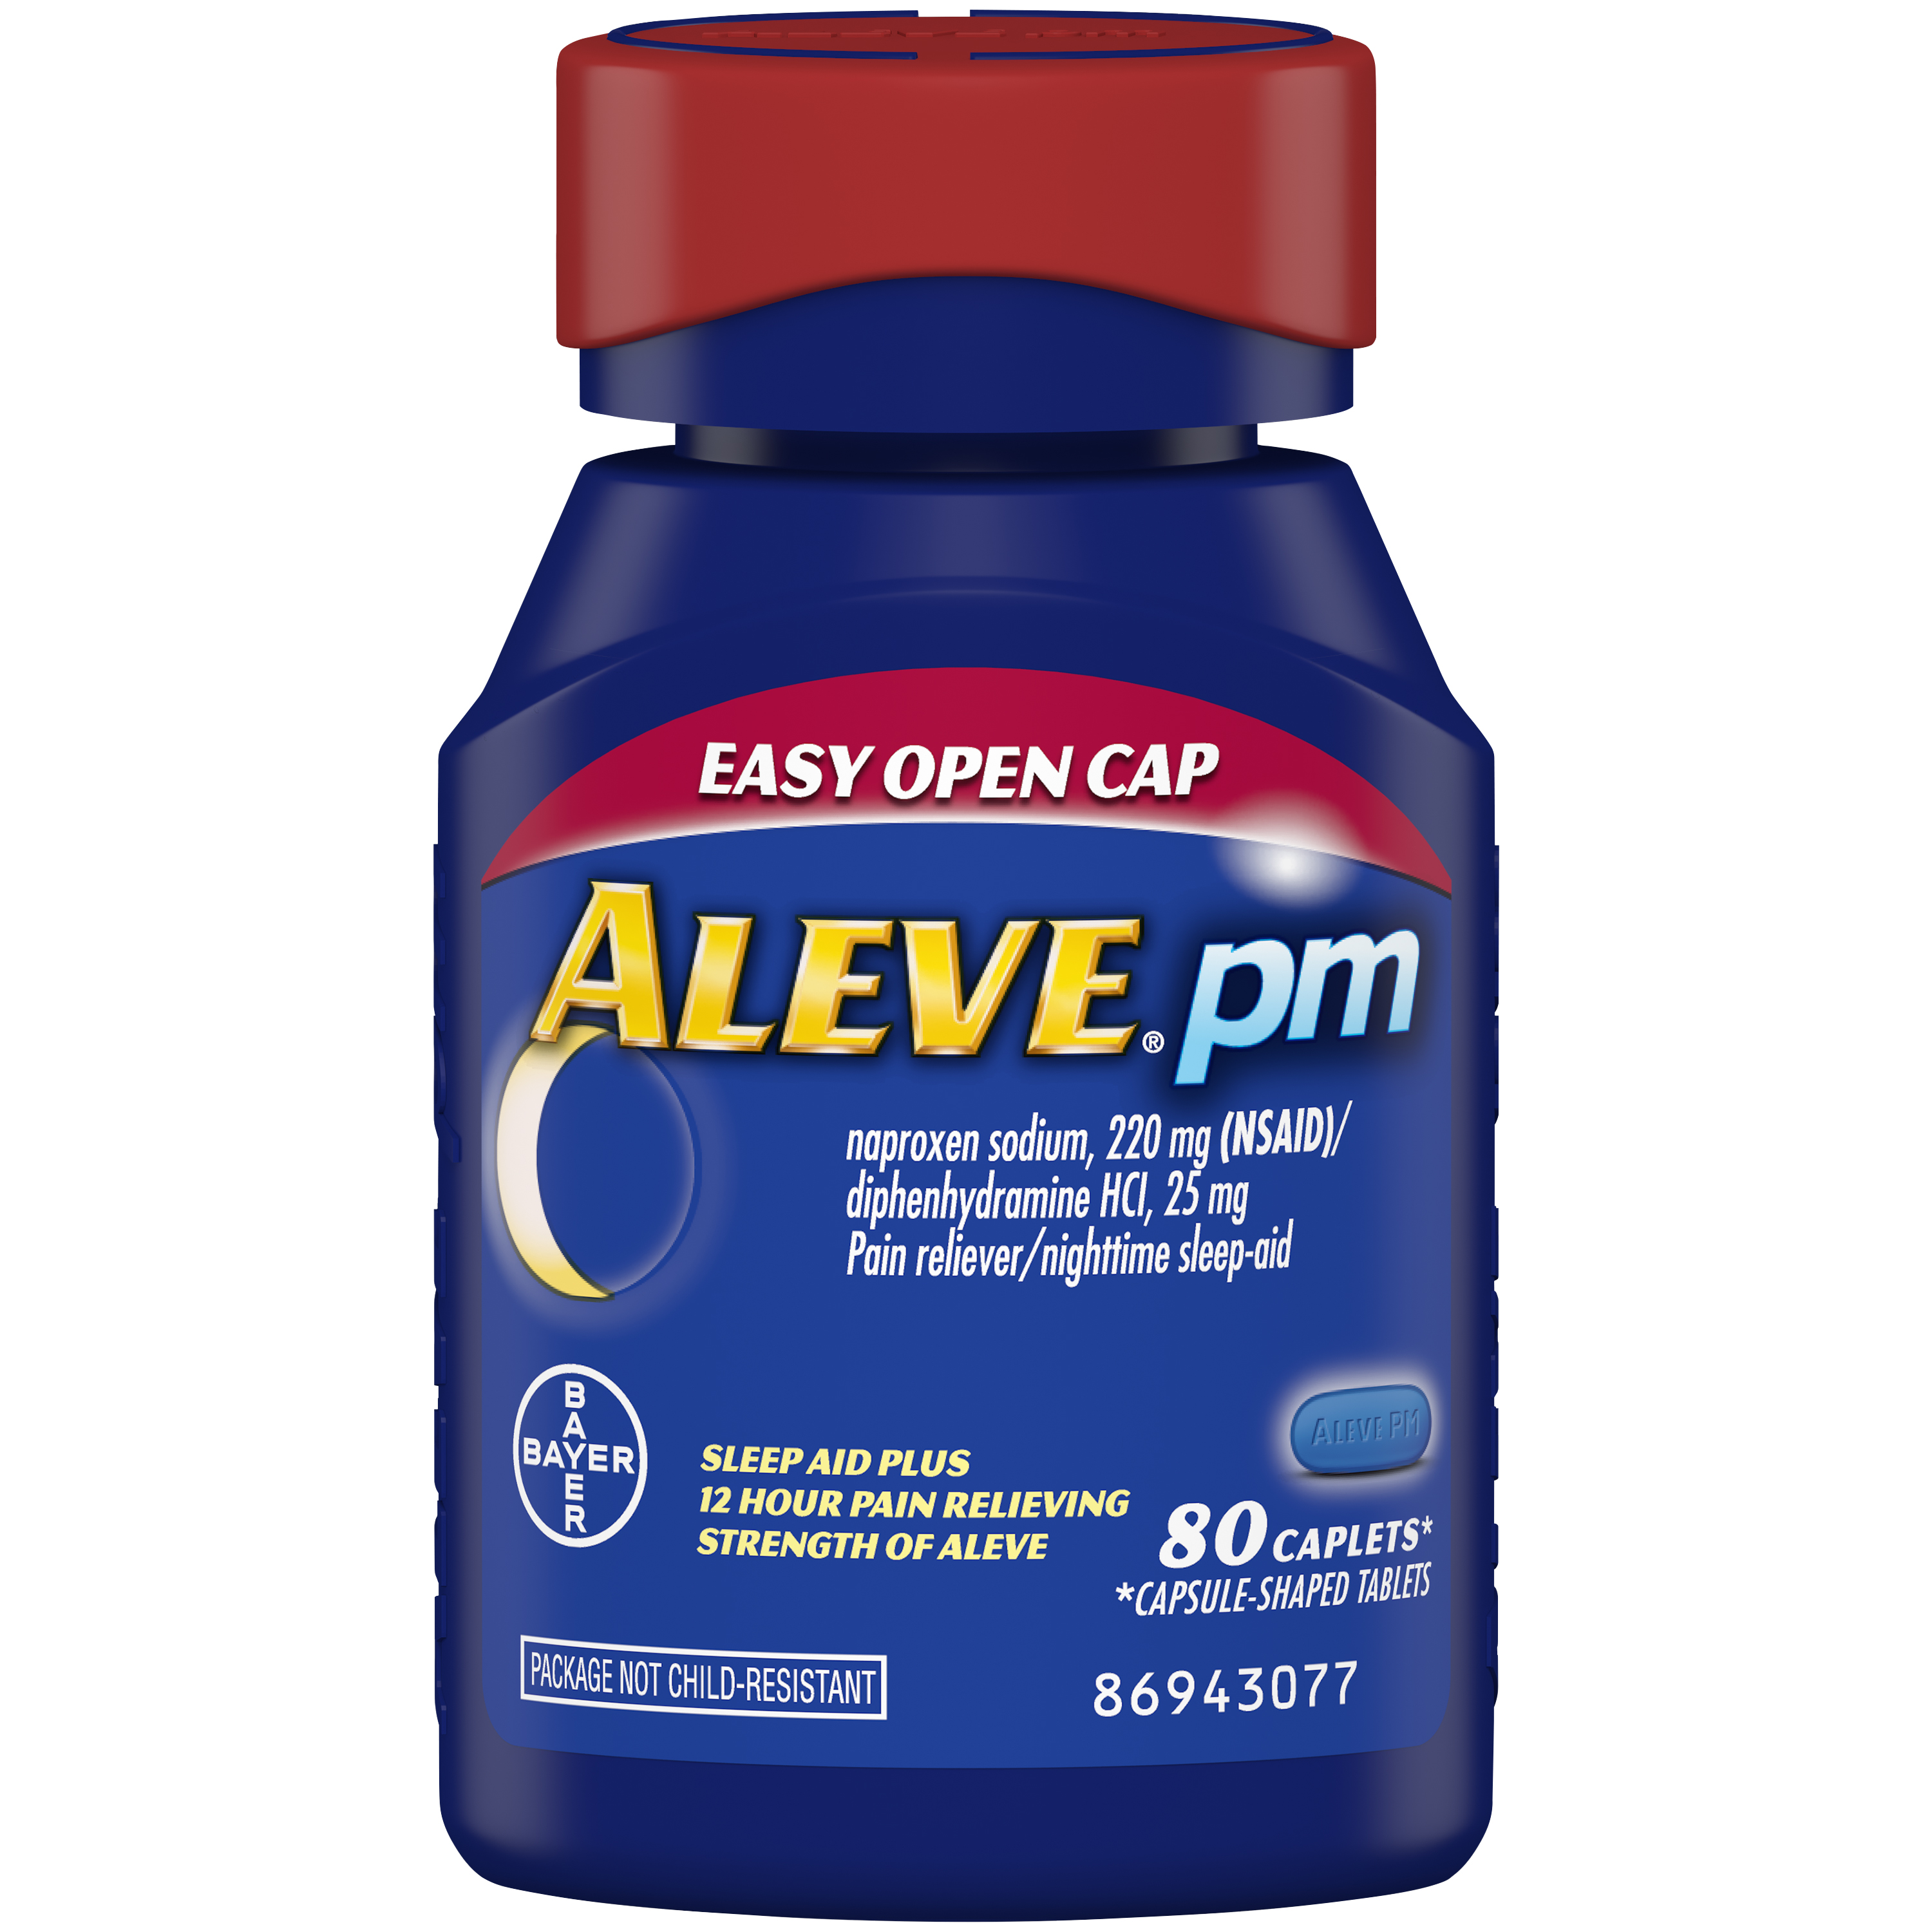 Aleve PM Soft Grip Arthritis Cap Pain Reliever/Nighttime Sleep-Aid Naproxen Sodium Caplets, 220 mg, 80 ct - image 2 of 12